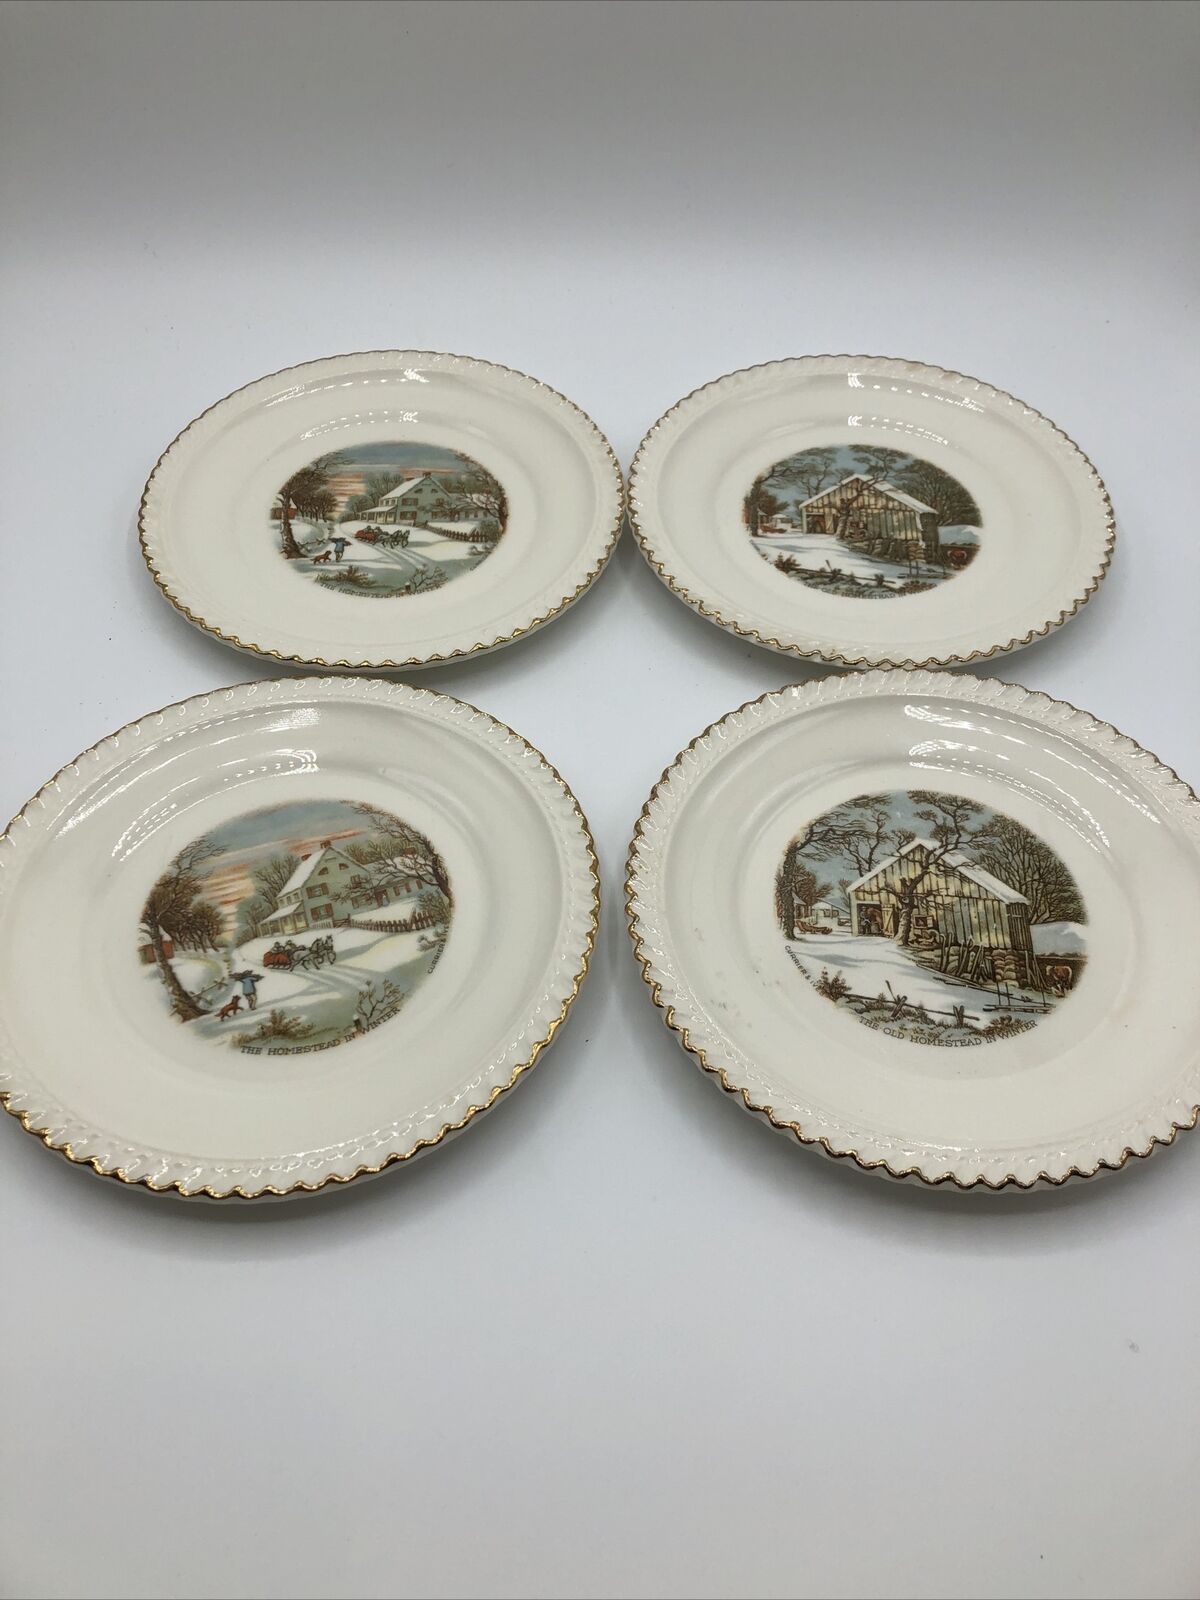 4 Vintage Harkerware Currier & Ives Dessert Plates